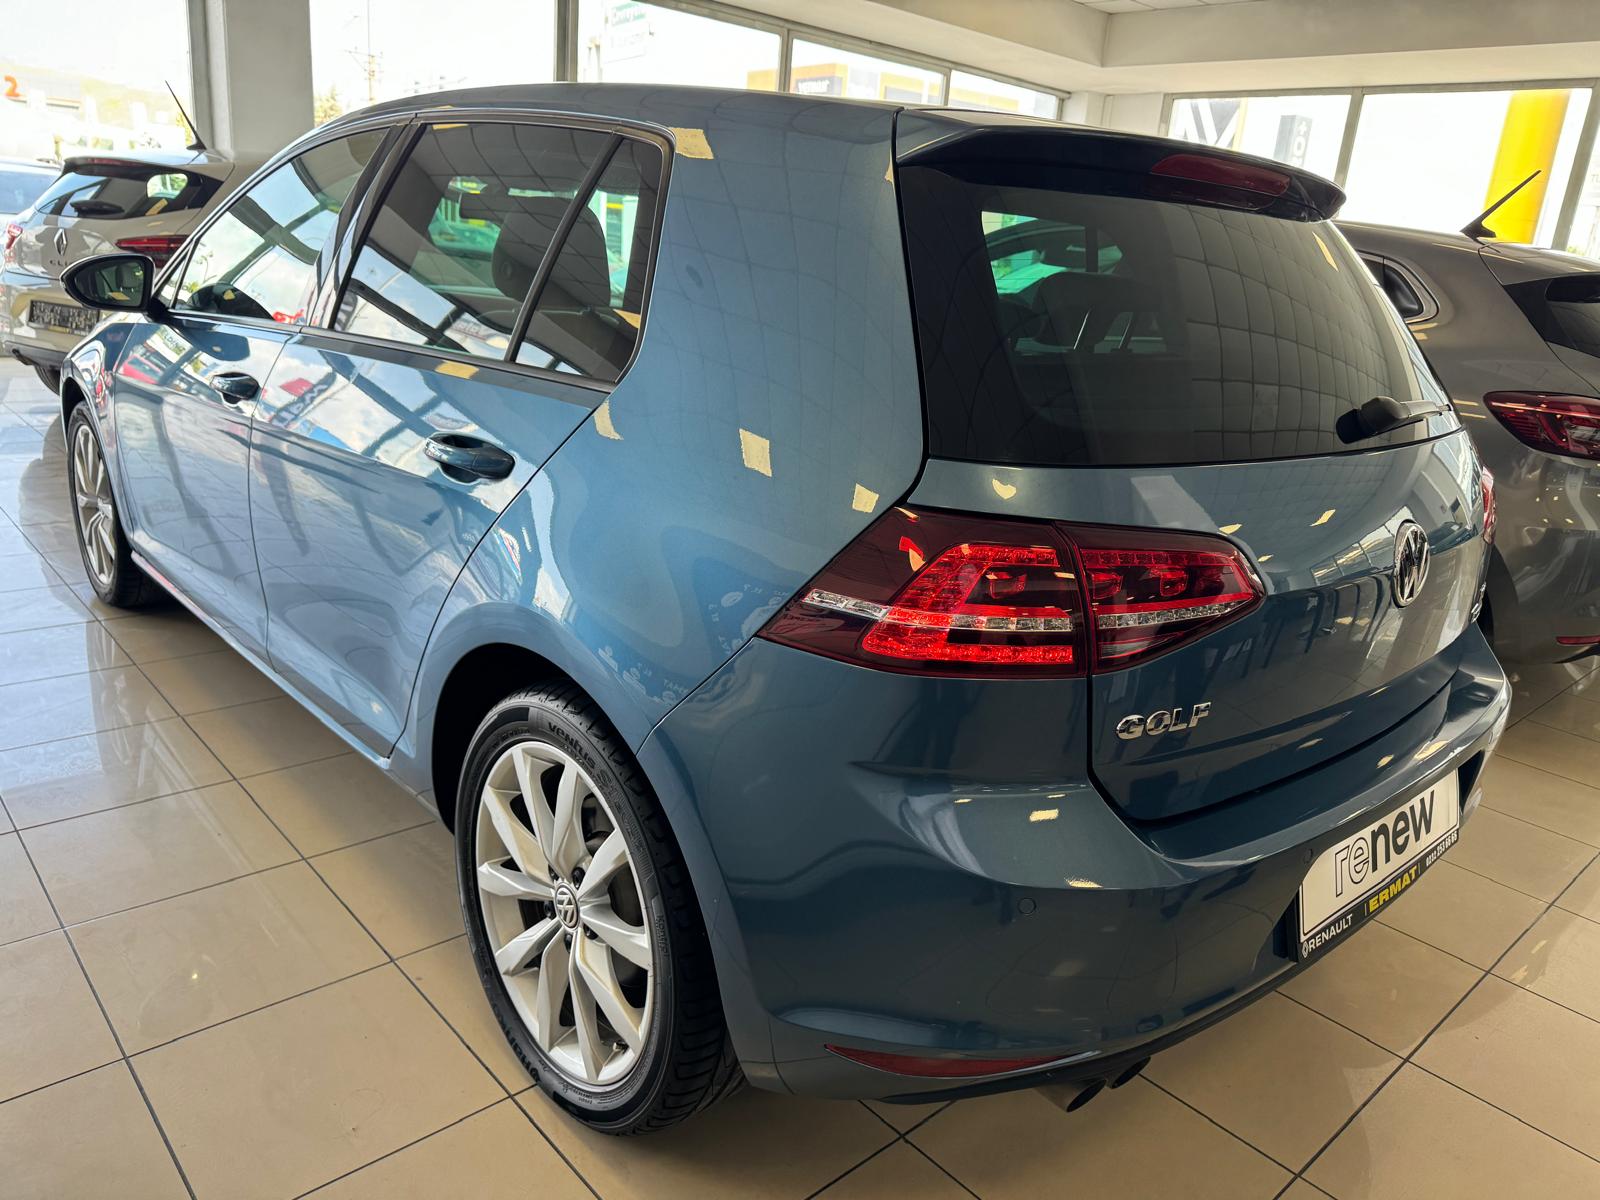 2015 Benzin Manuel Volkswagen Golf Mavi Ermat 2.El